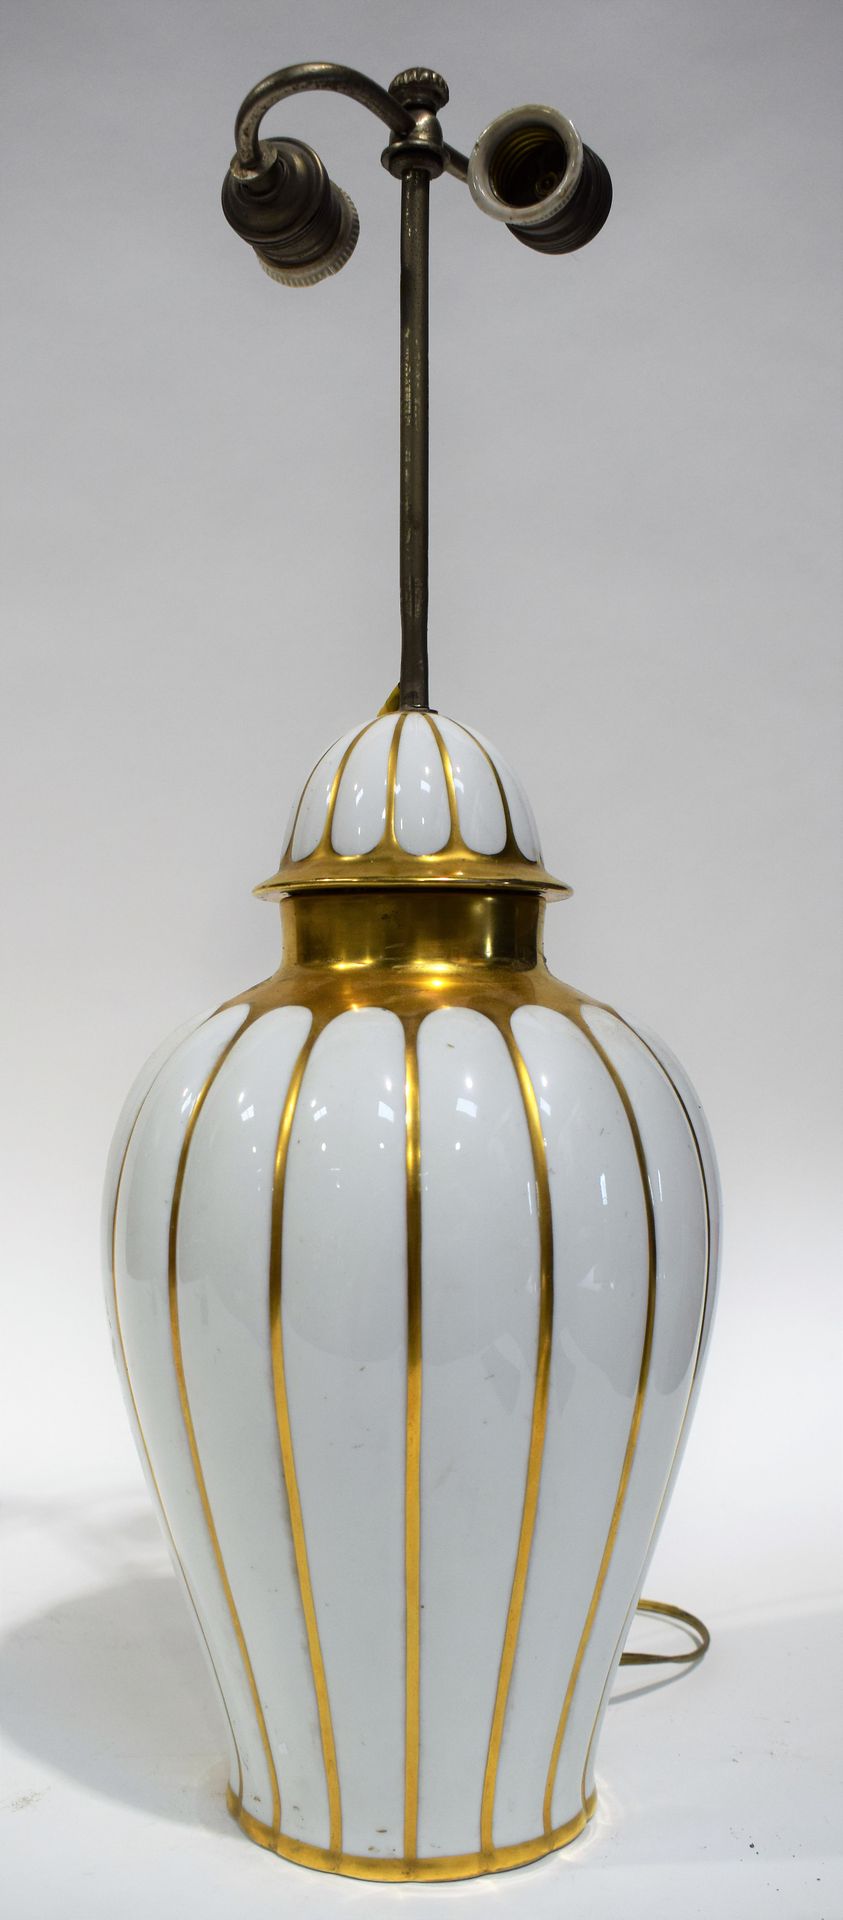 Null 一套两个LAMPS。

1.中国多色瓷花瓶装成的灯。中国 20世纪。高度：45厘米

2.镶有金边的白瓷花瓶，作为一盏灯。高度：60厘米

|

一套&hellip;